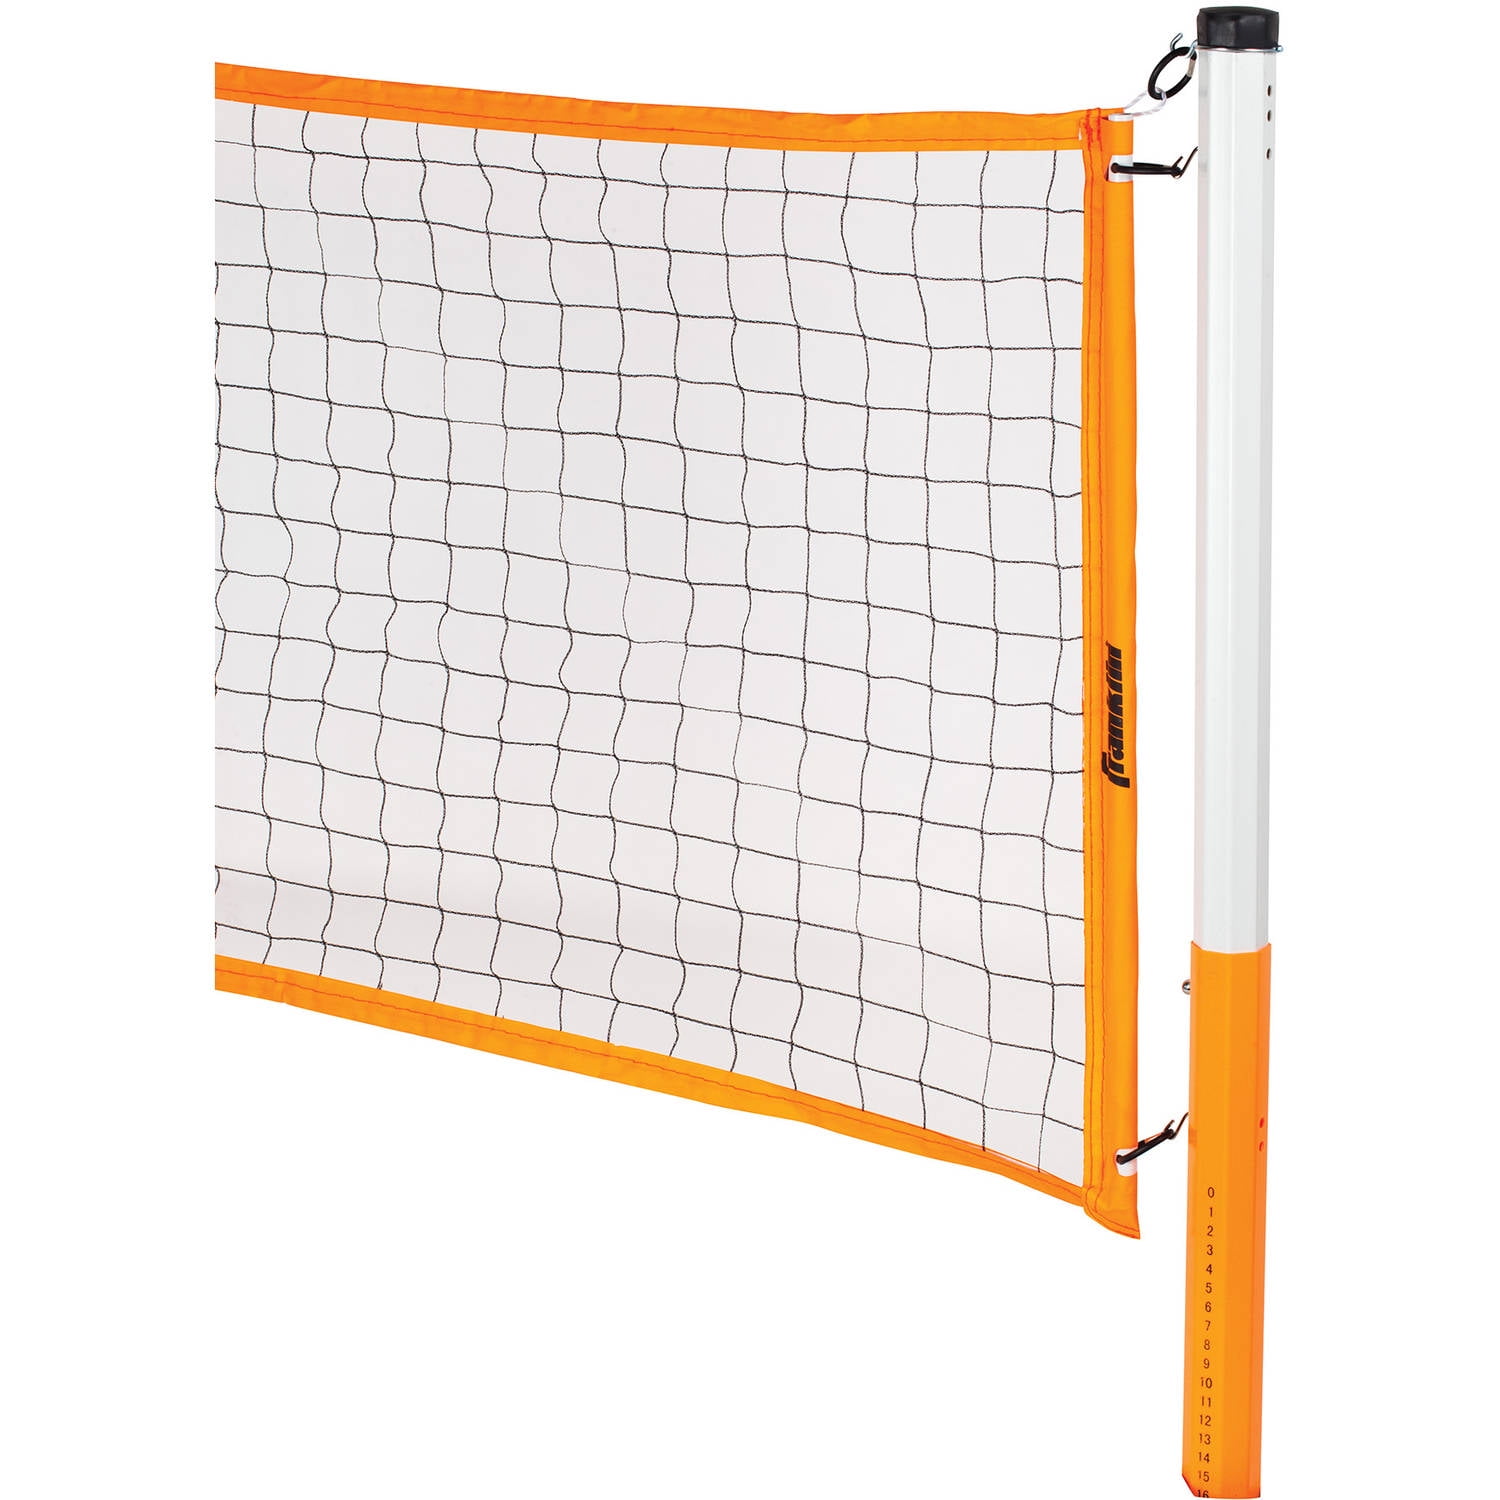 74101488 New Sports Badminton-Set Deluxe 